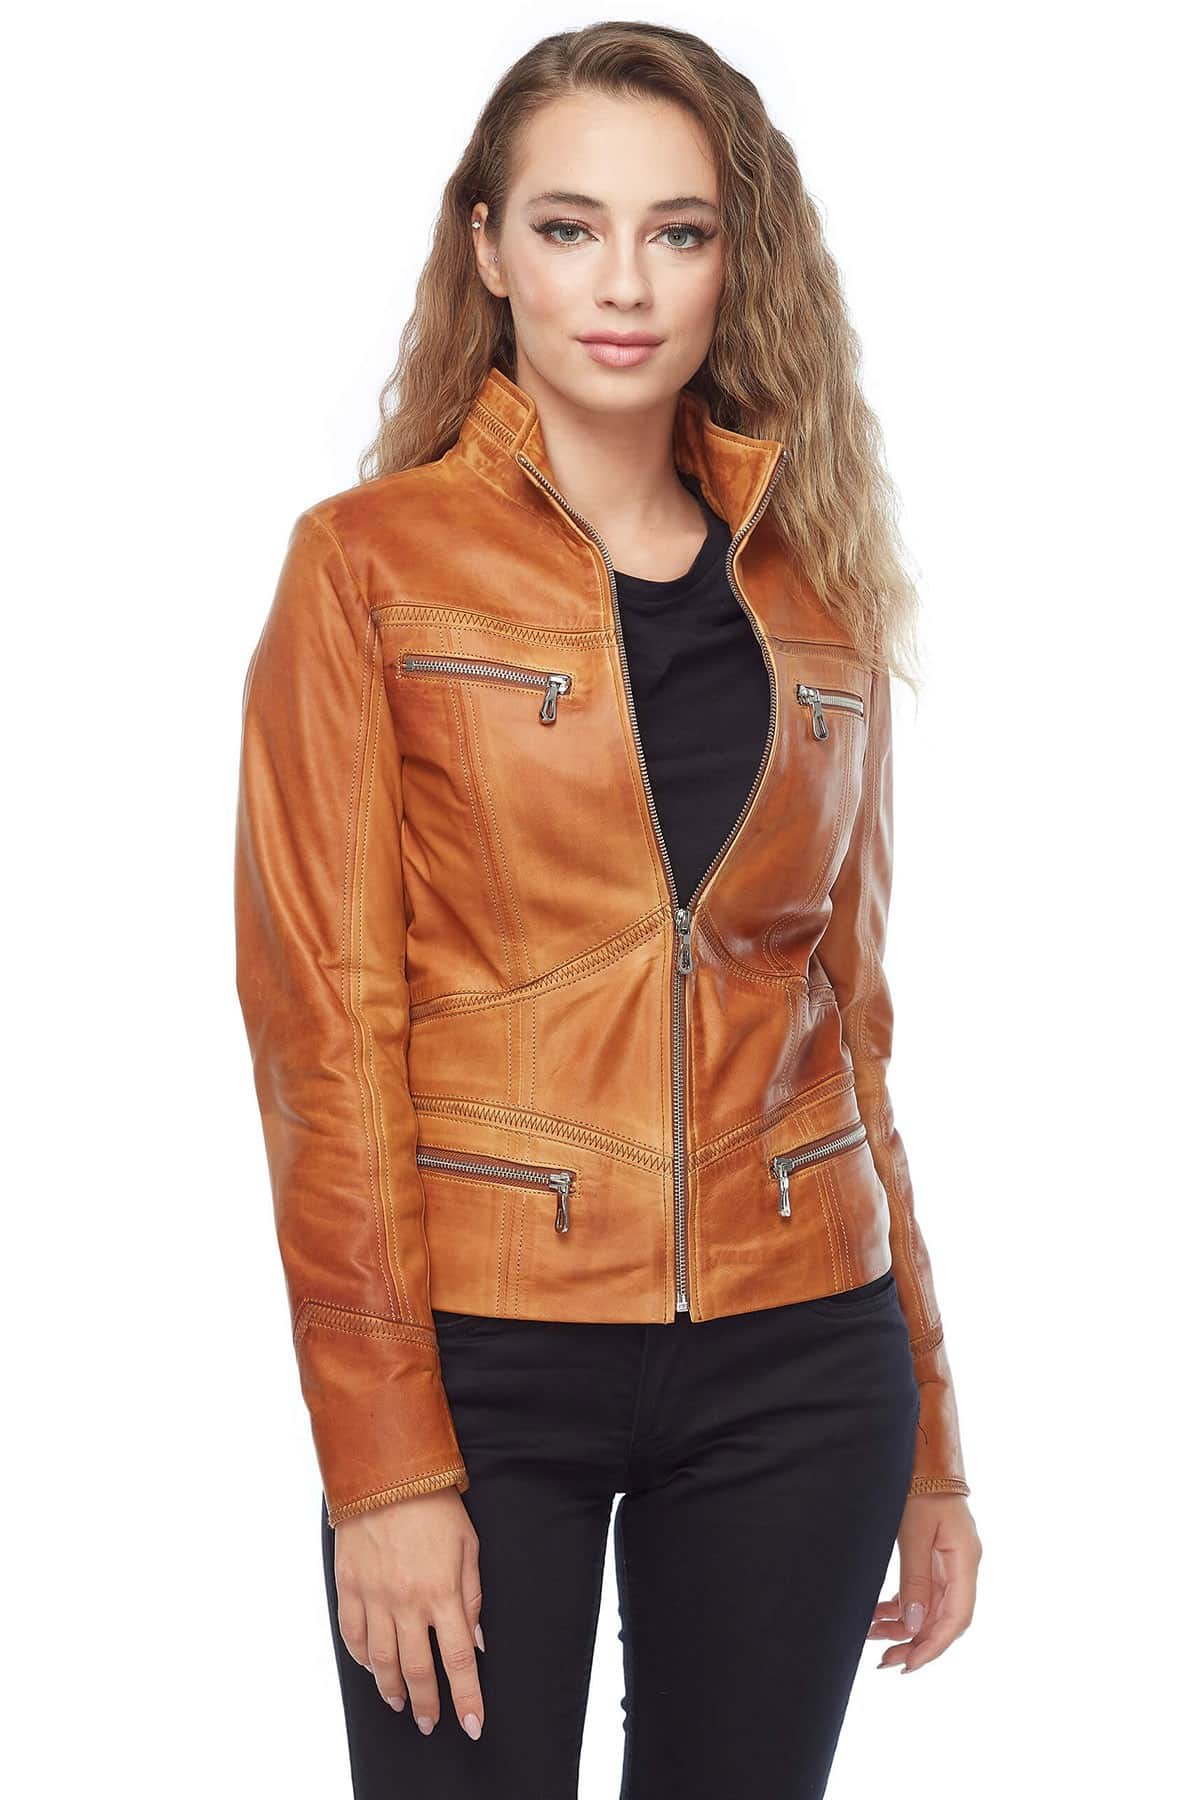 JULIET Light Brown Sport Leather Jacket